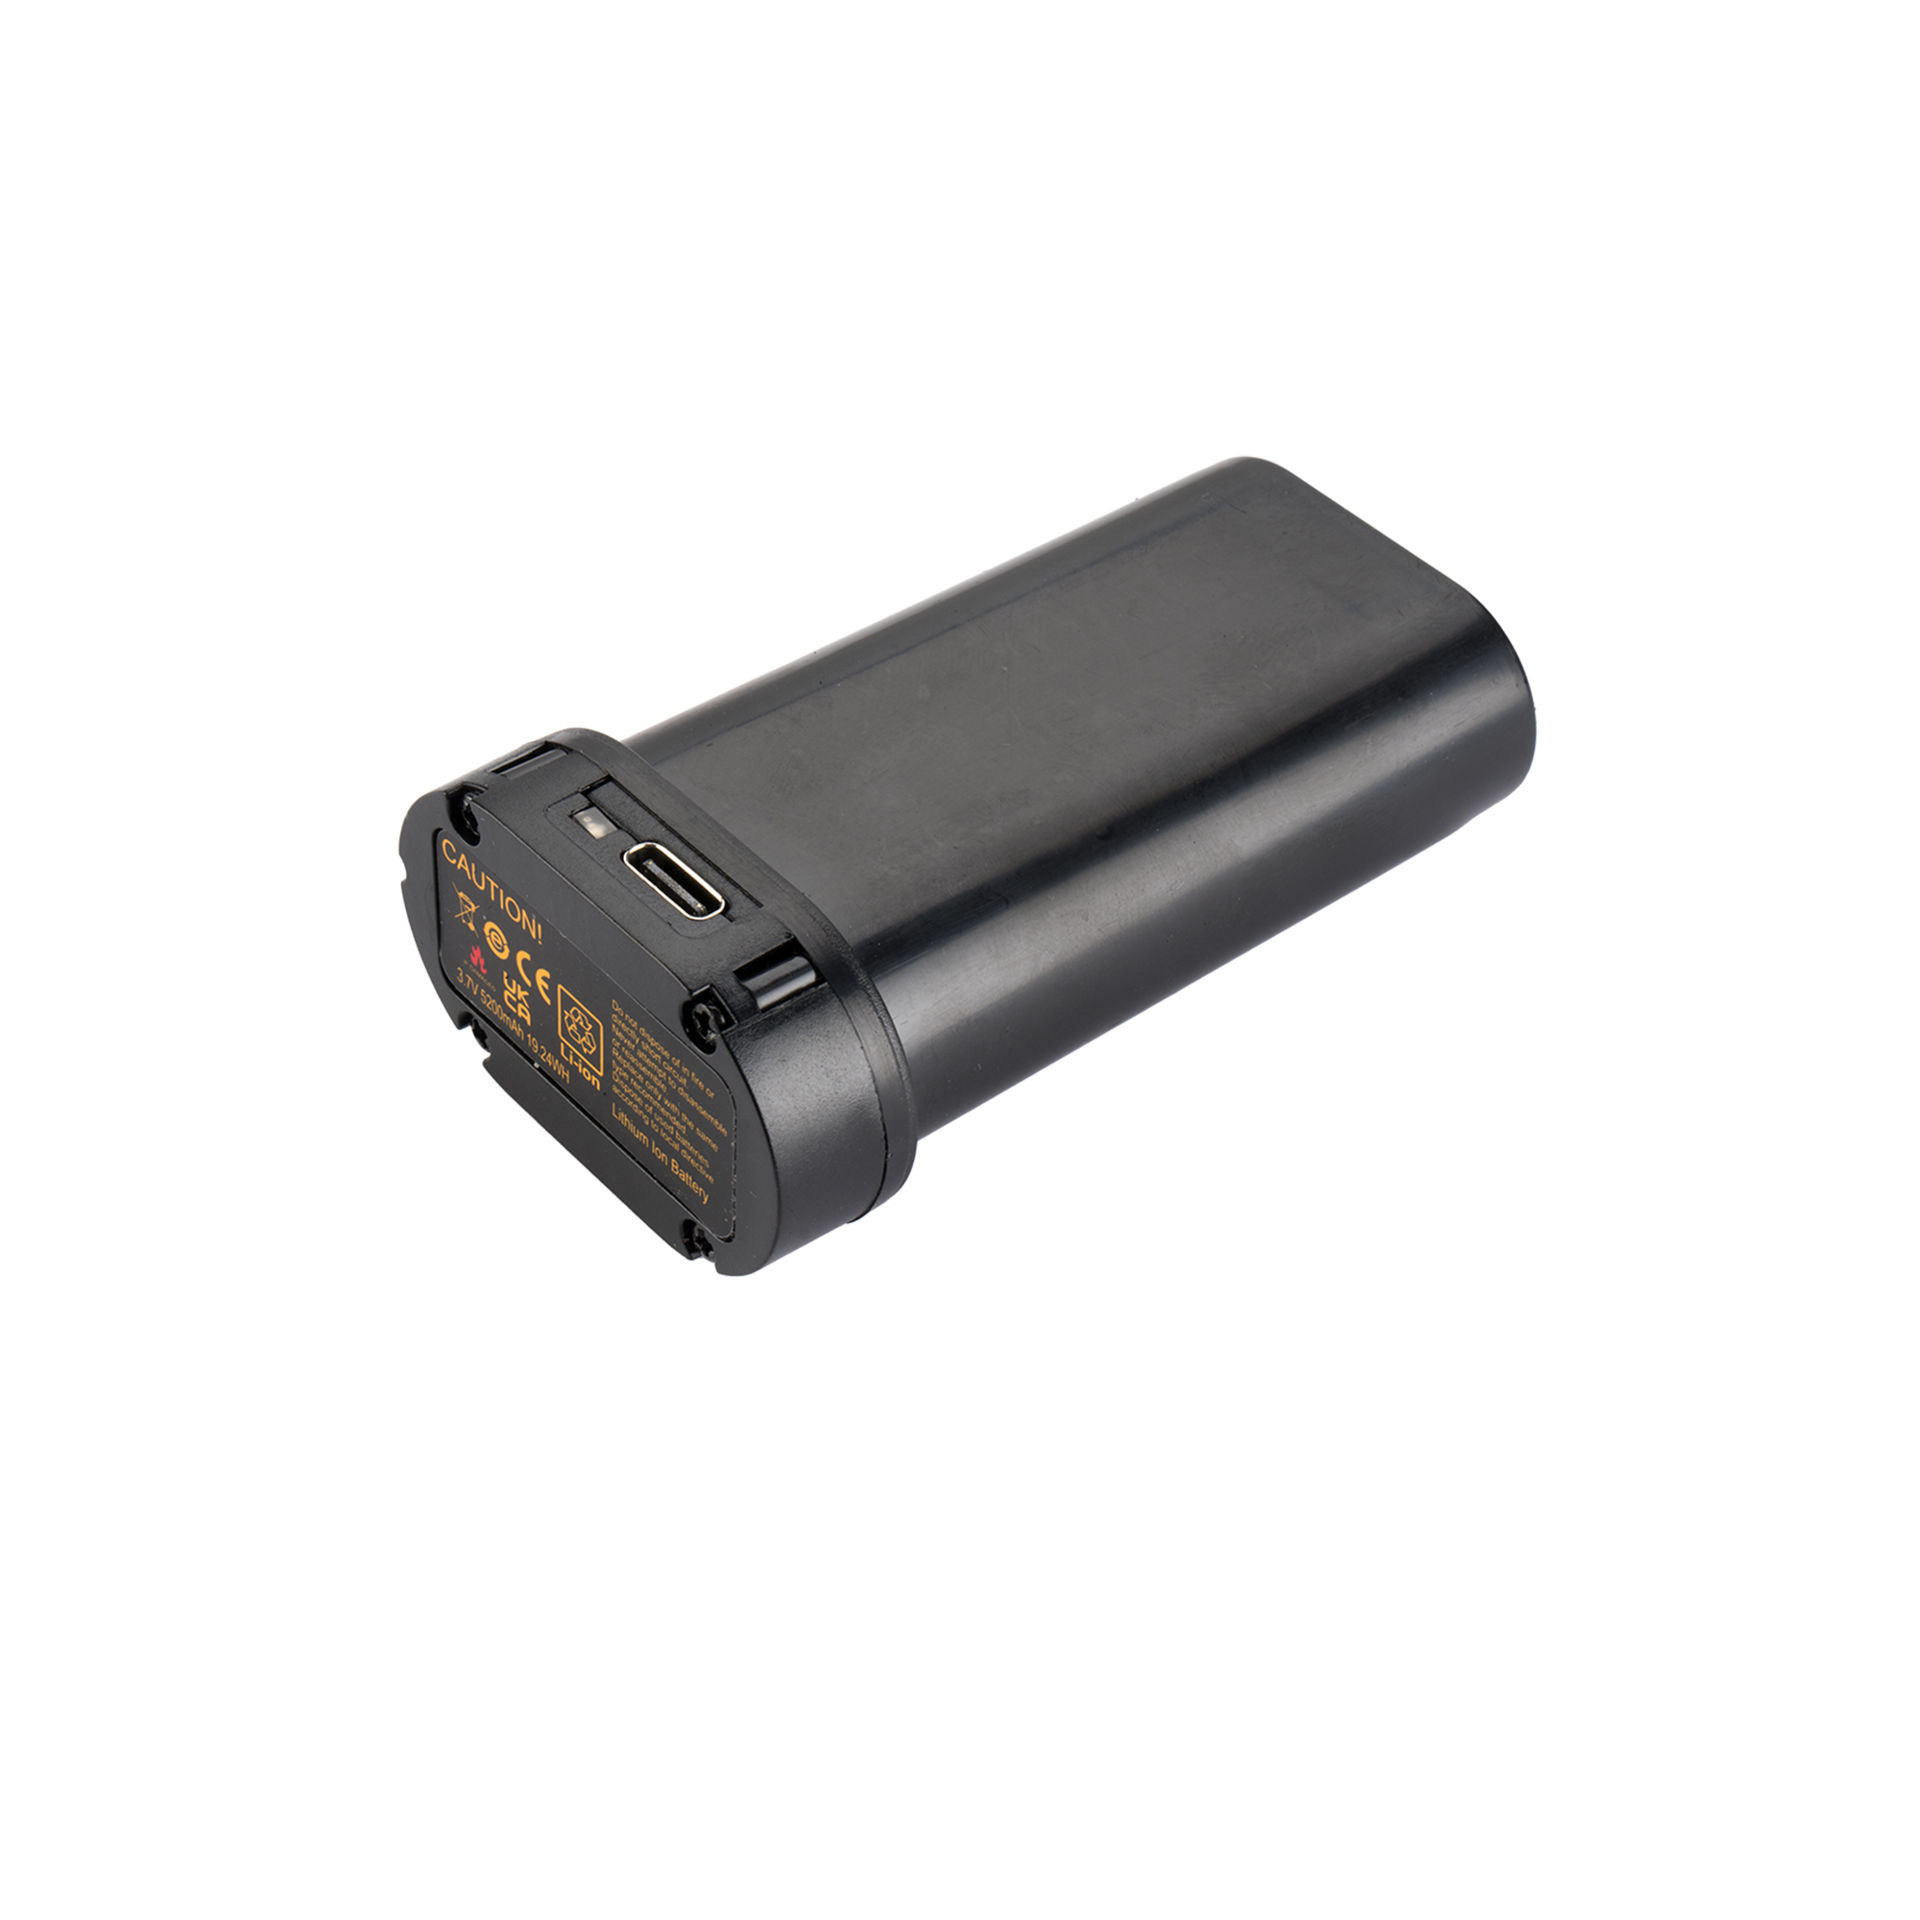 Batterie lithium-ion 3,7v 5200 mah pour niveau laser niv30360r-v